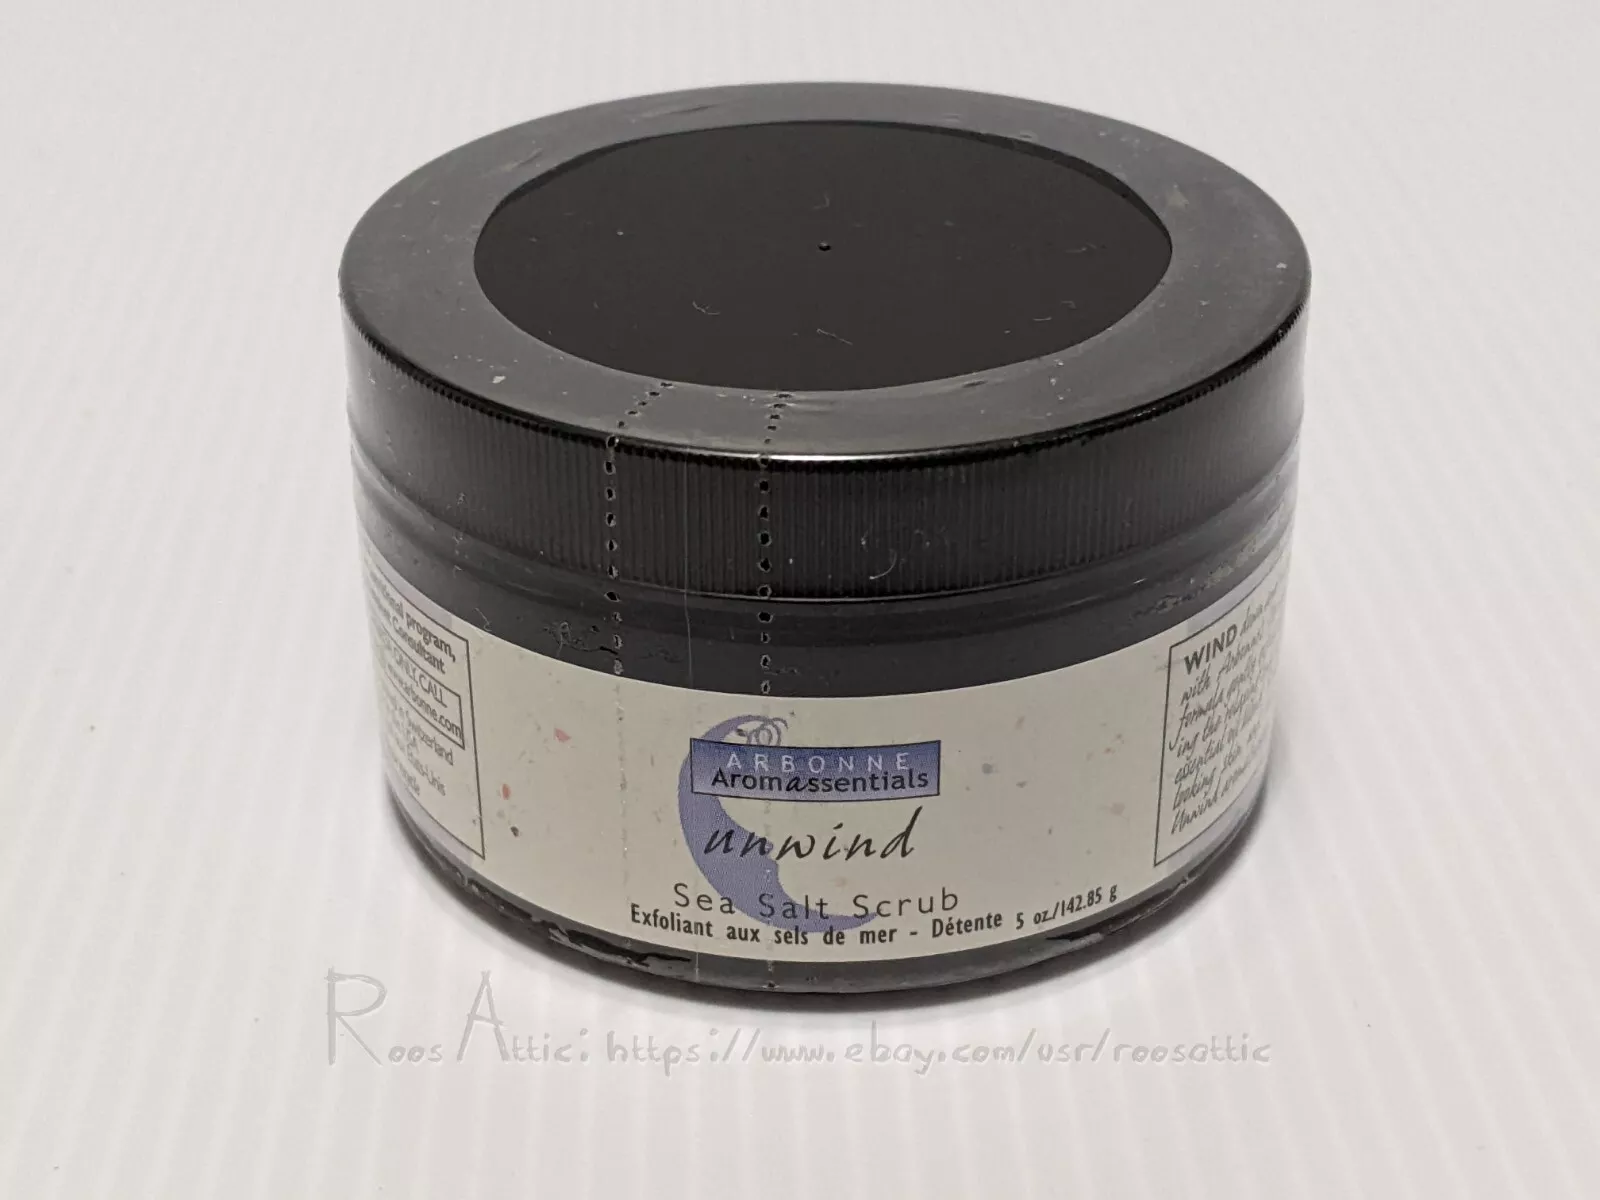 Arbonne Aromassentials Unwind Sea Salt Scrub 5 oz Exfoliating (NEW ~ SEALED)